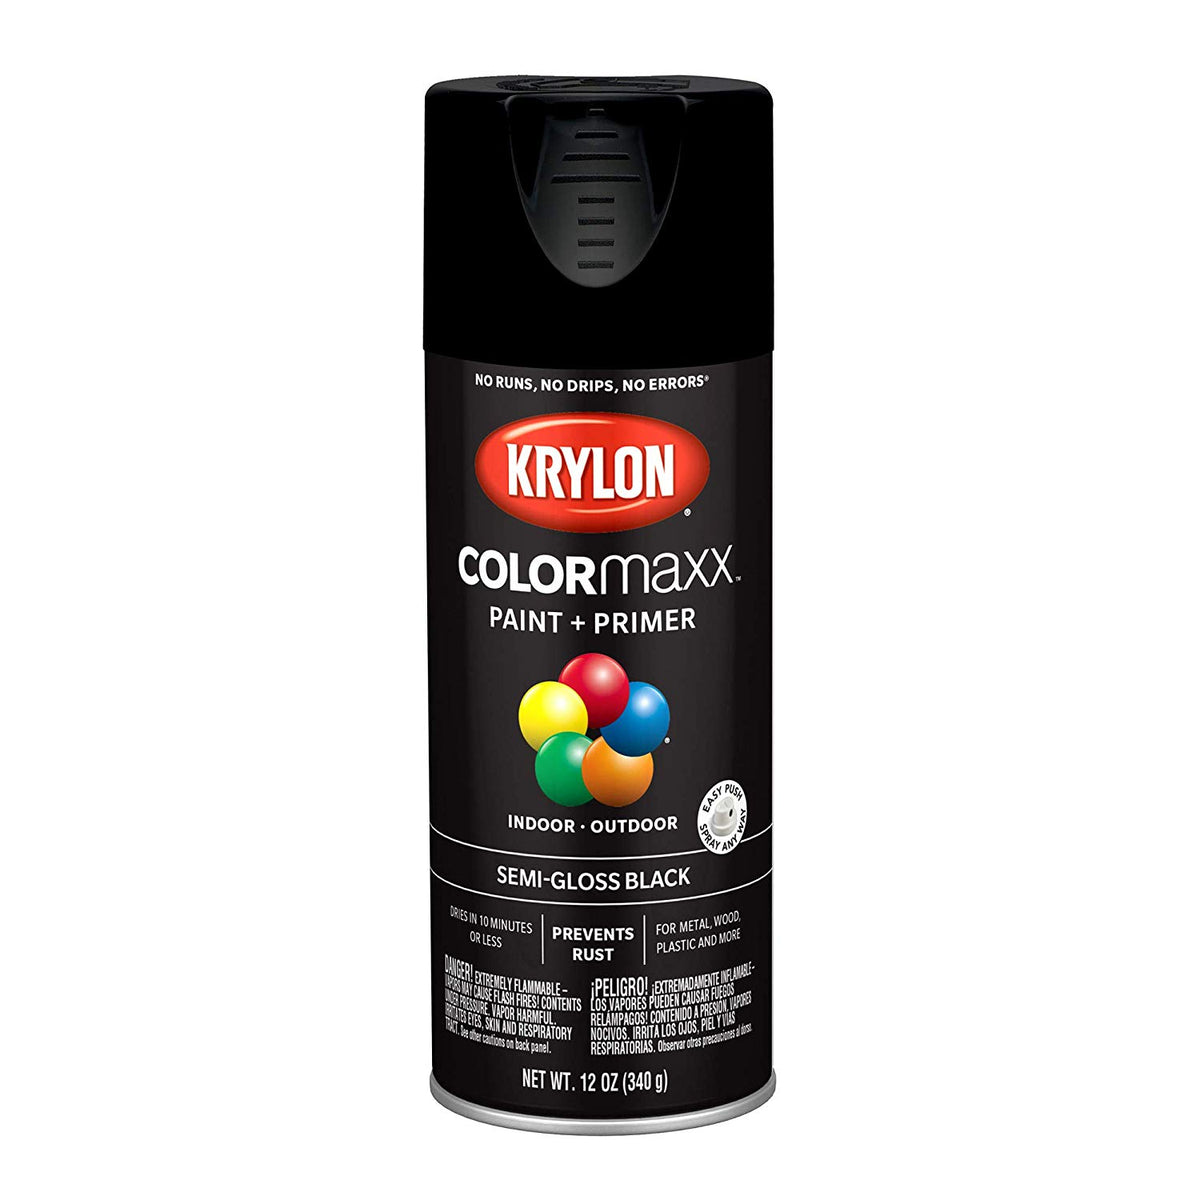 Krylon K05579007 COLORmaxx Paint + Primer Spray, Semi-Gloss Black, 12 Oz